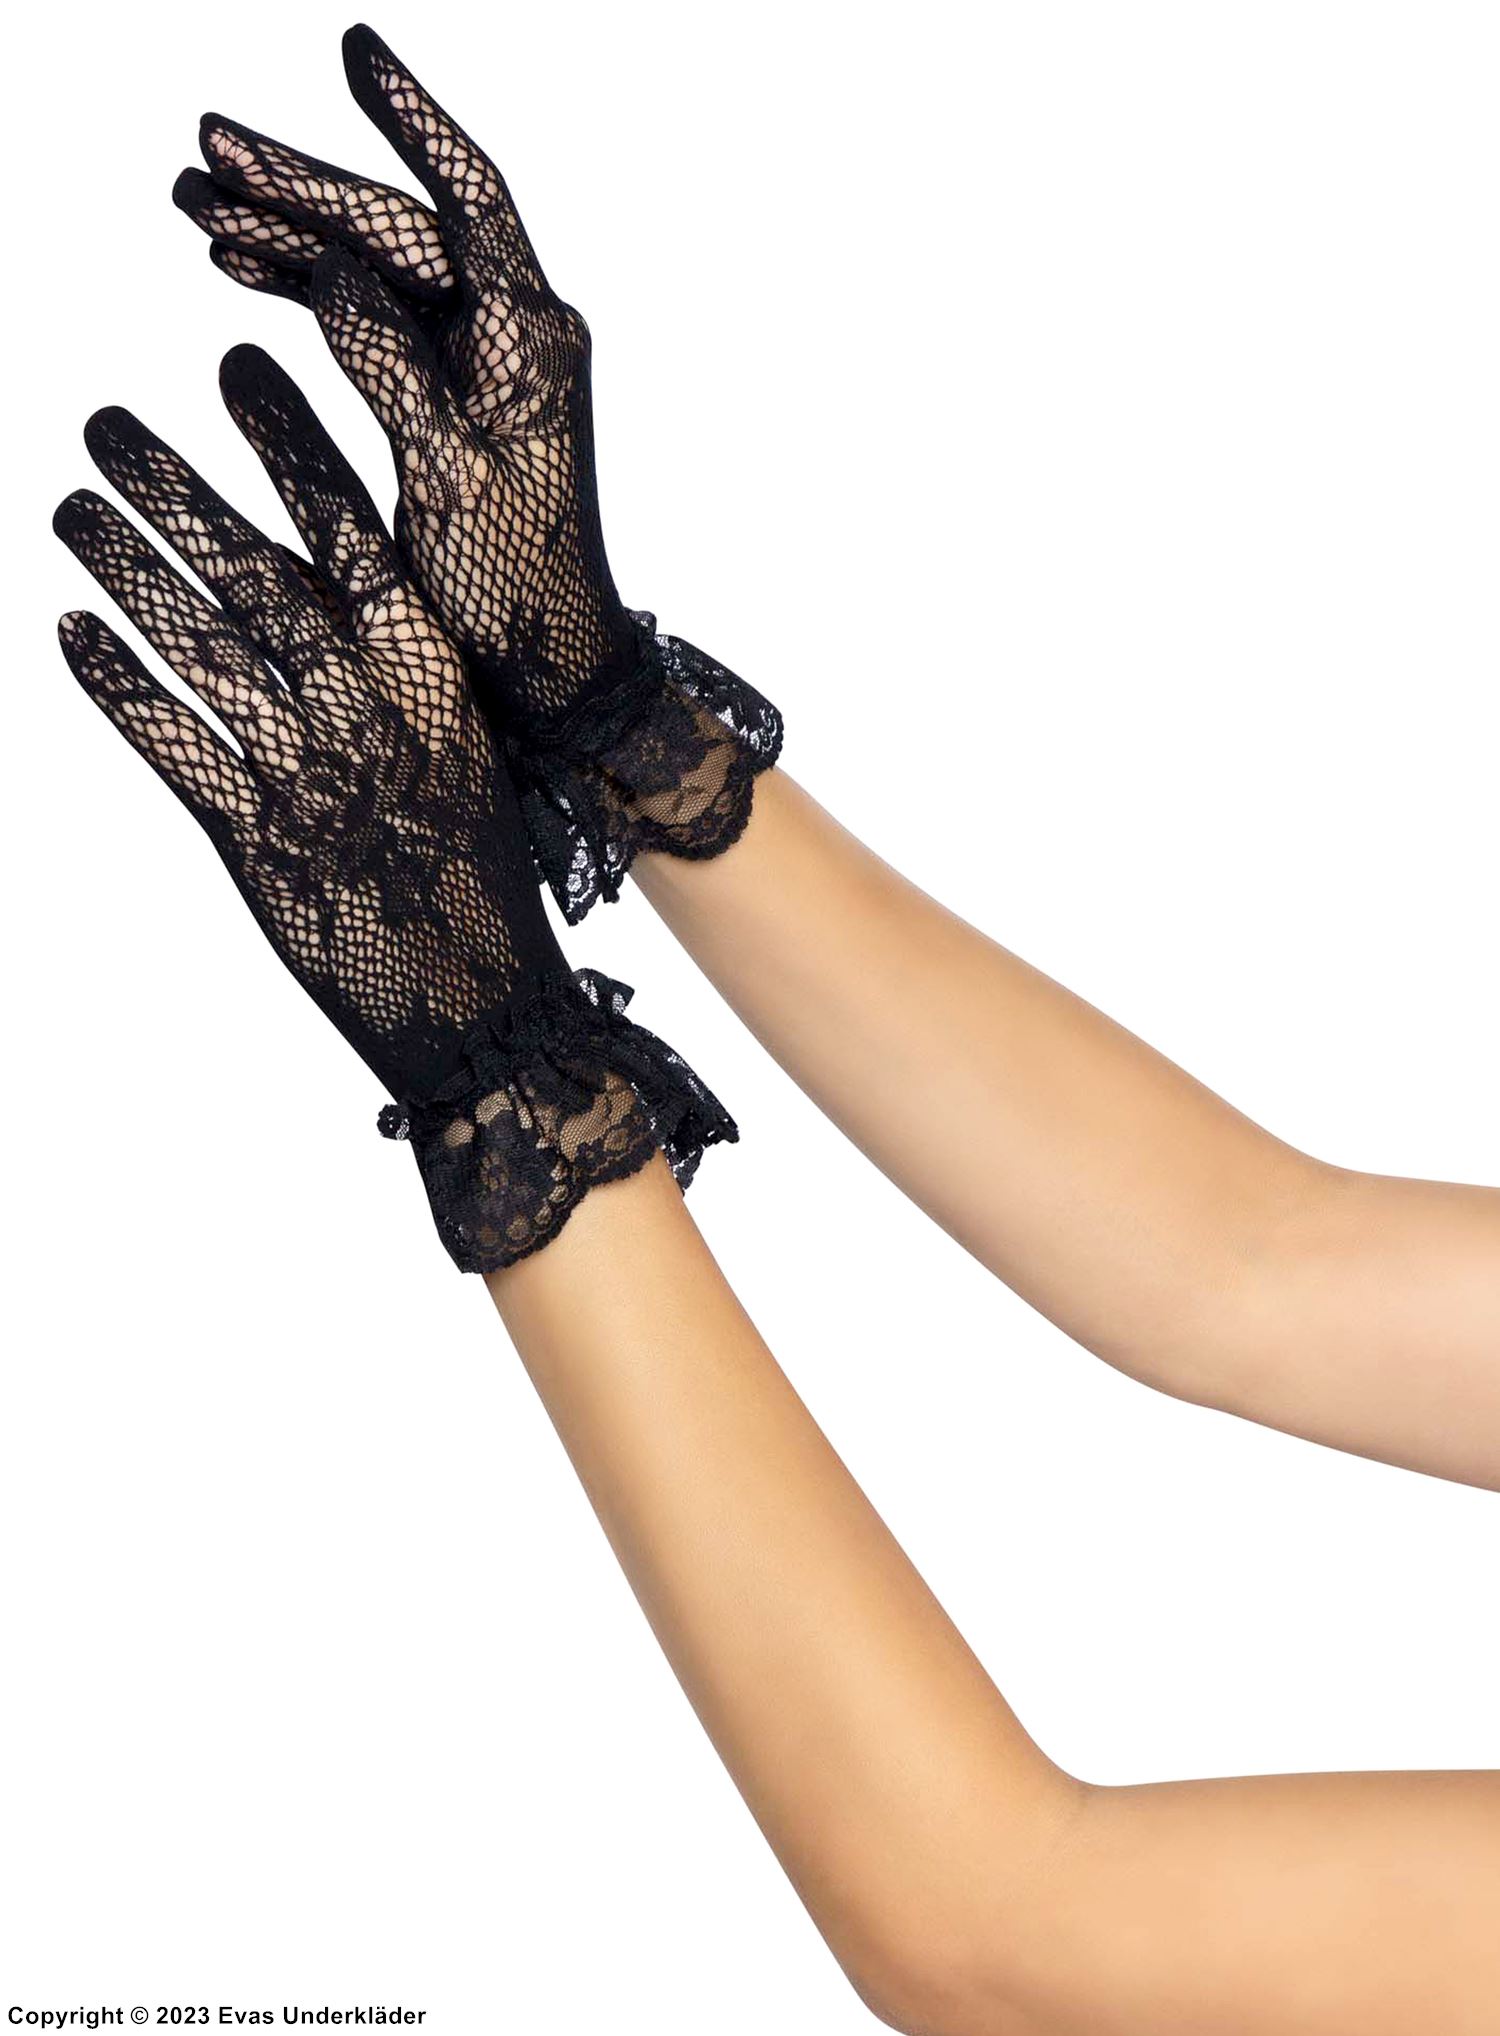 Gloves, floral lace